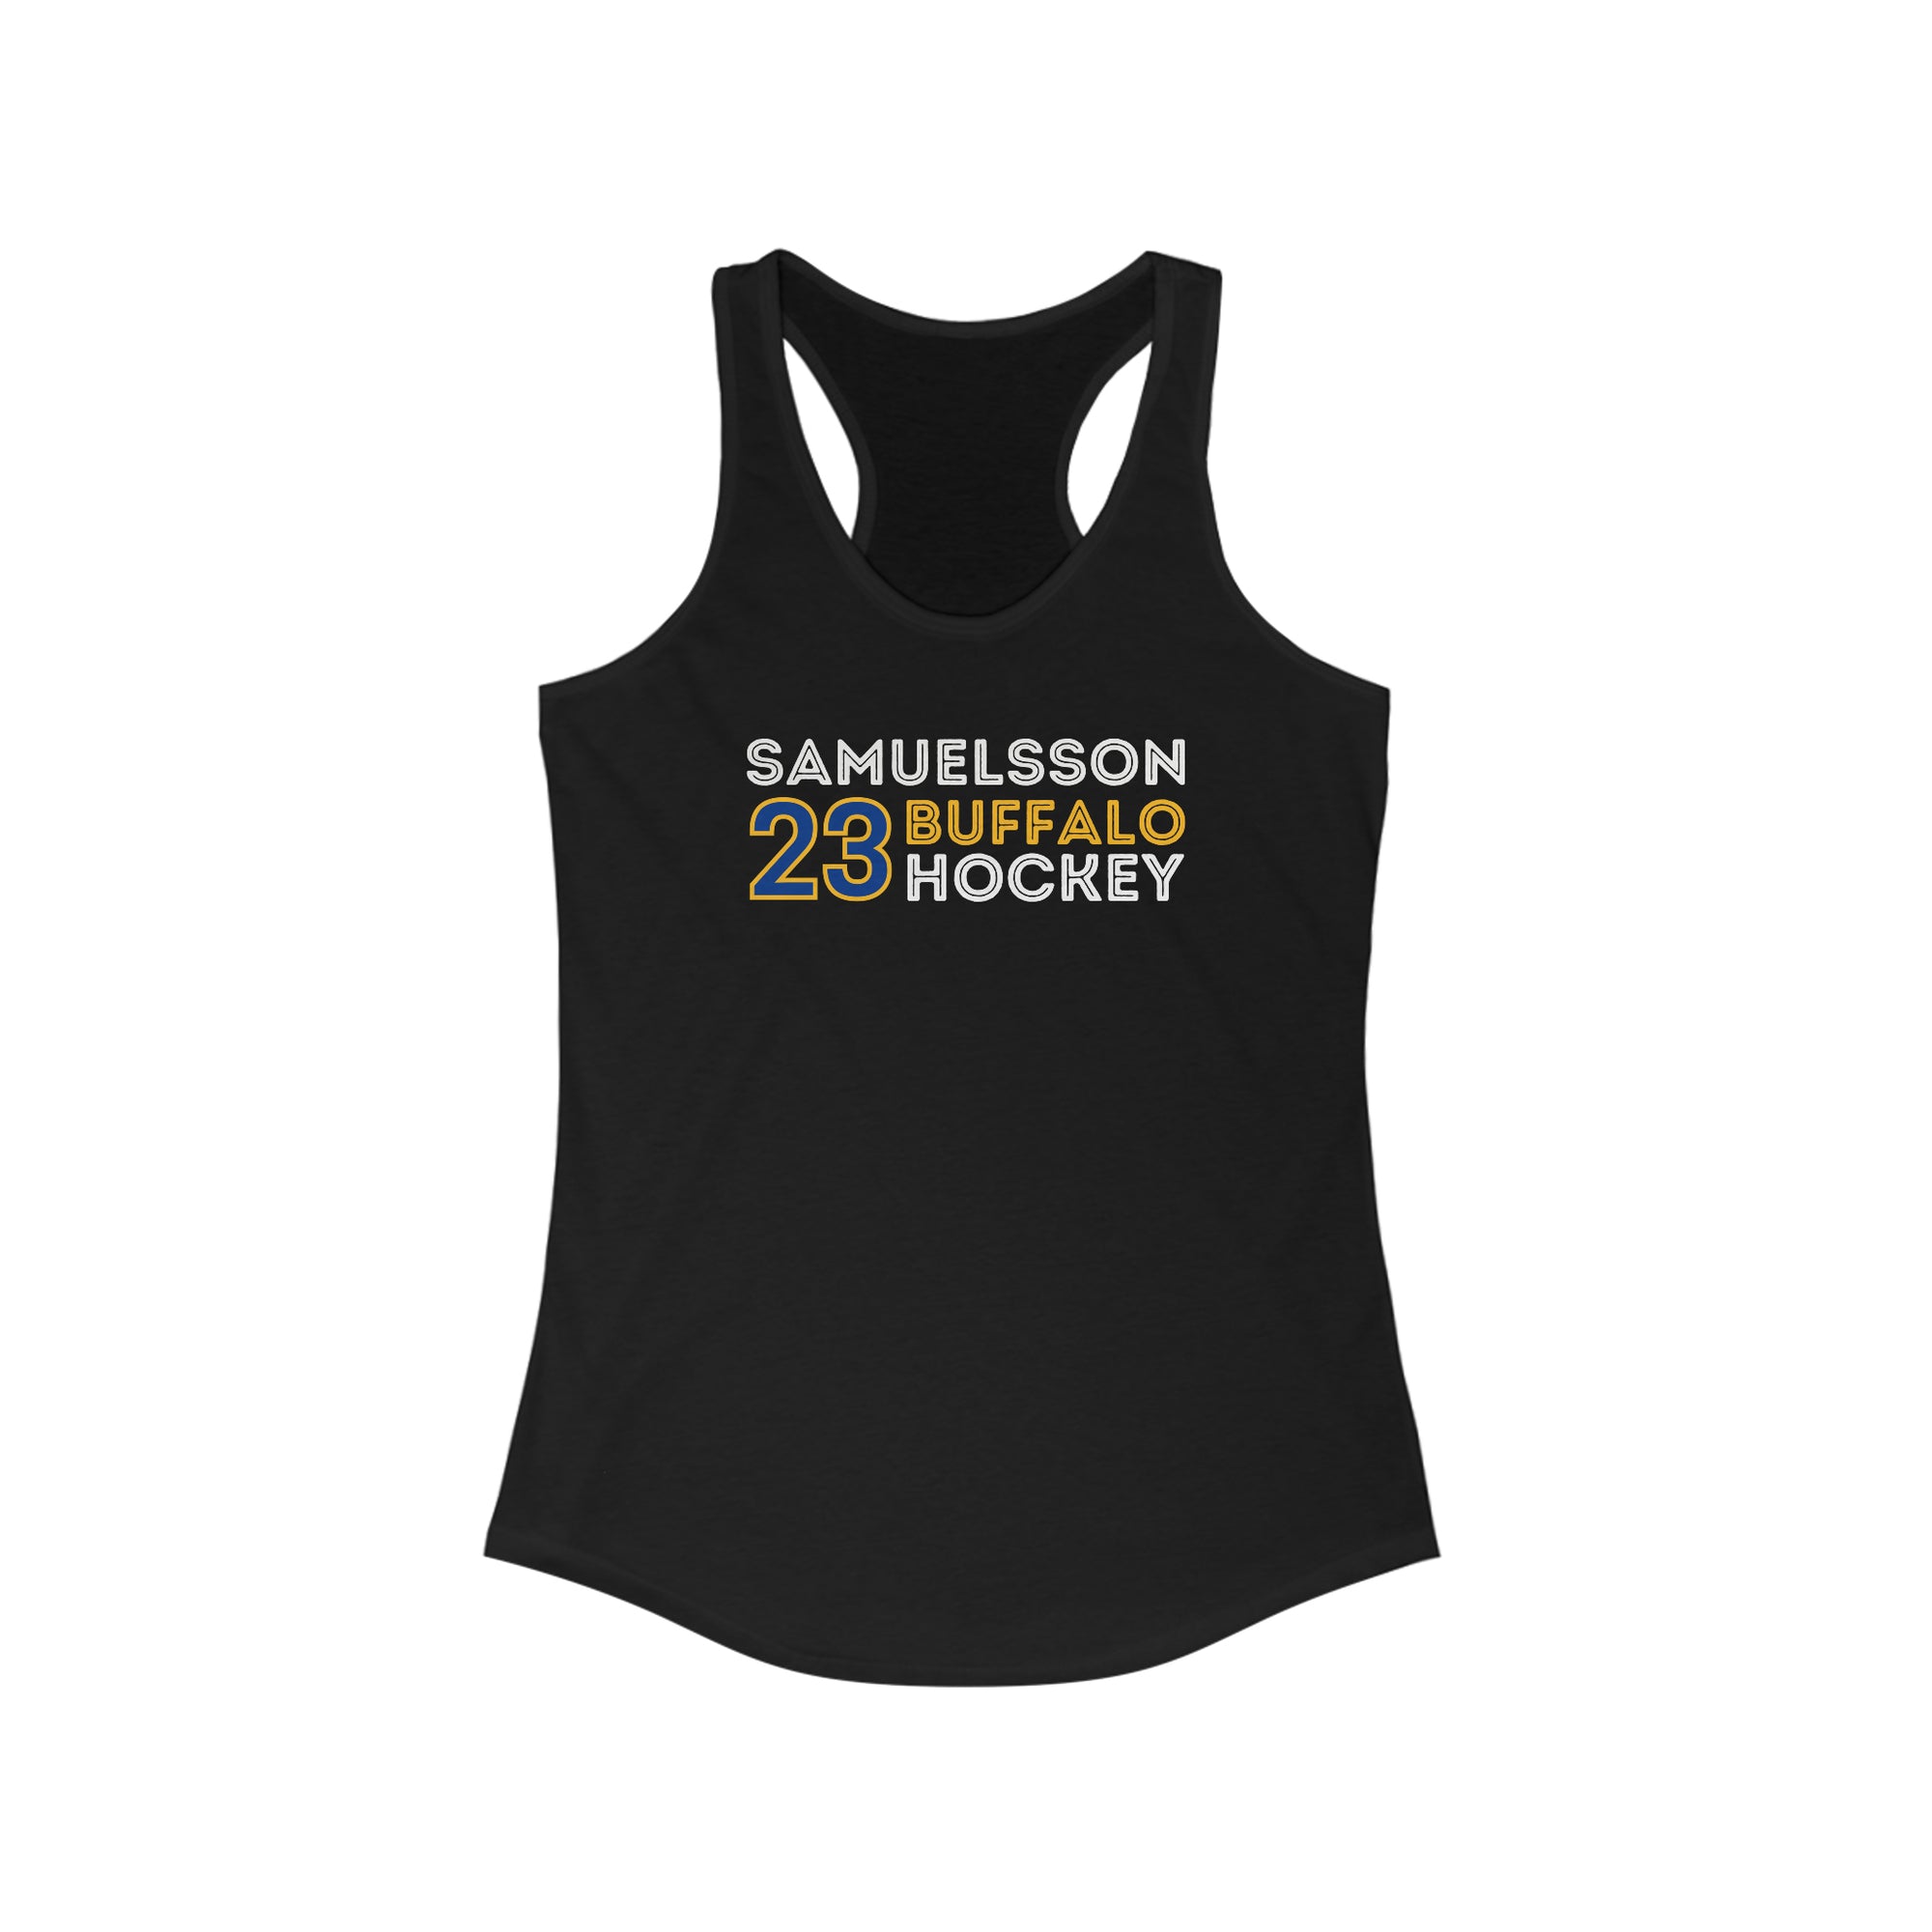 Samuelsson 23 Buffalo Hockey Grafitti Wall Design Women's Ideal Racerback Tank Top